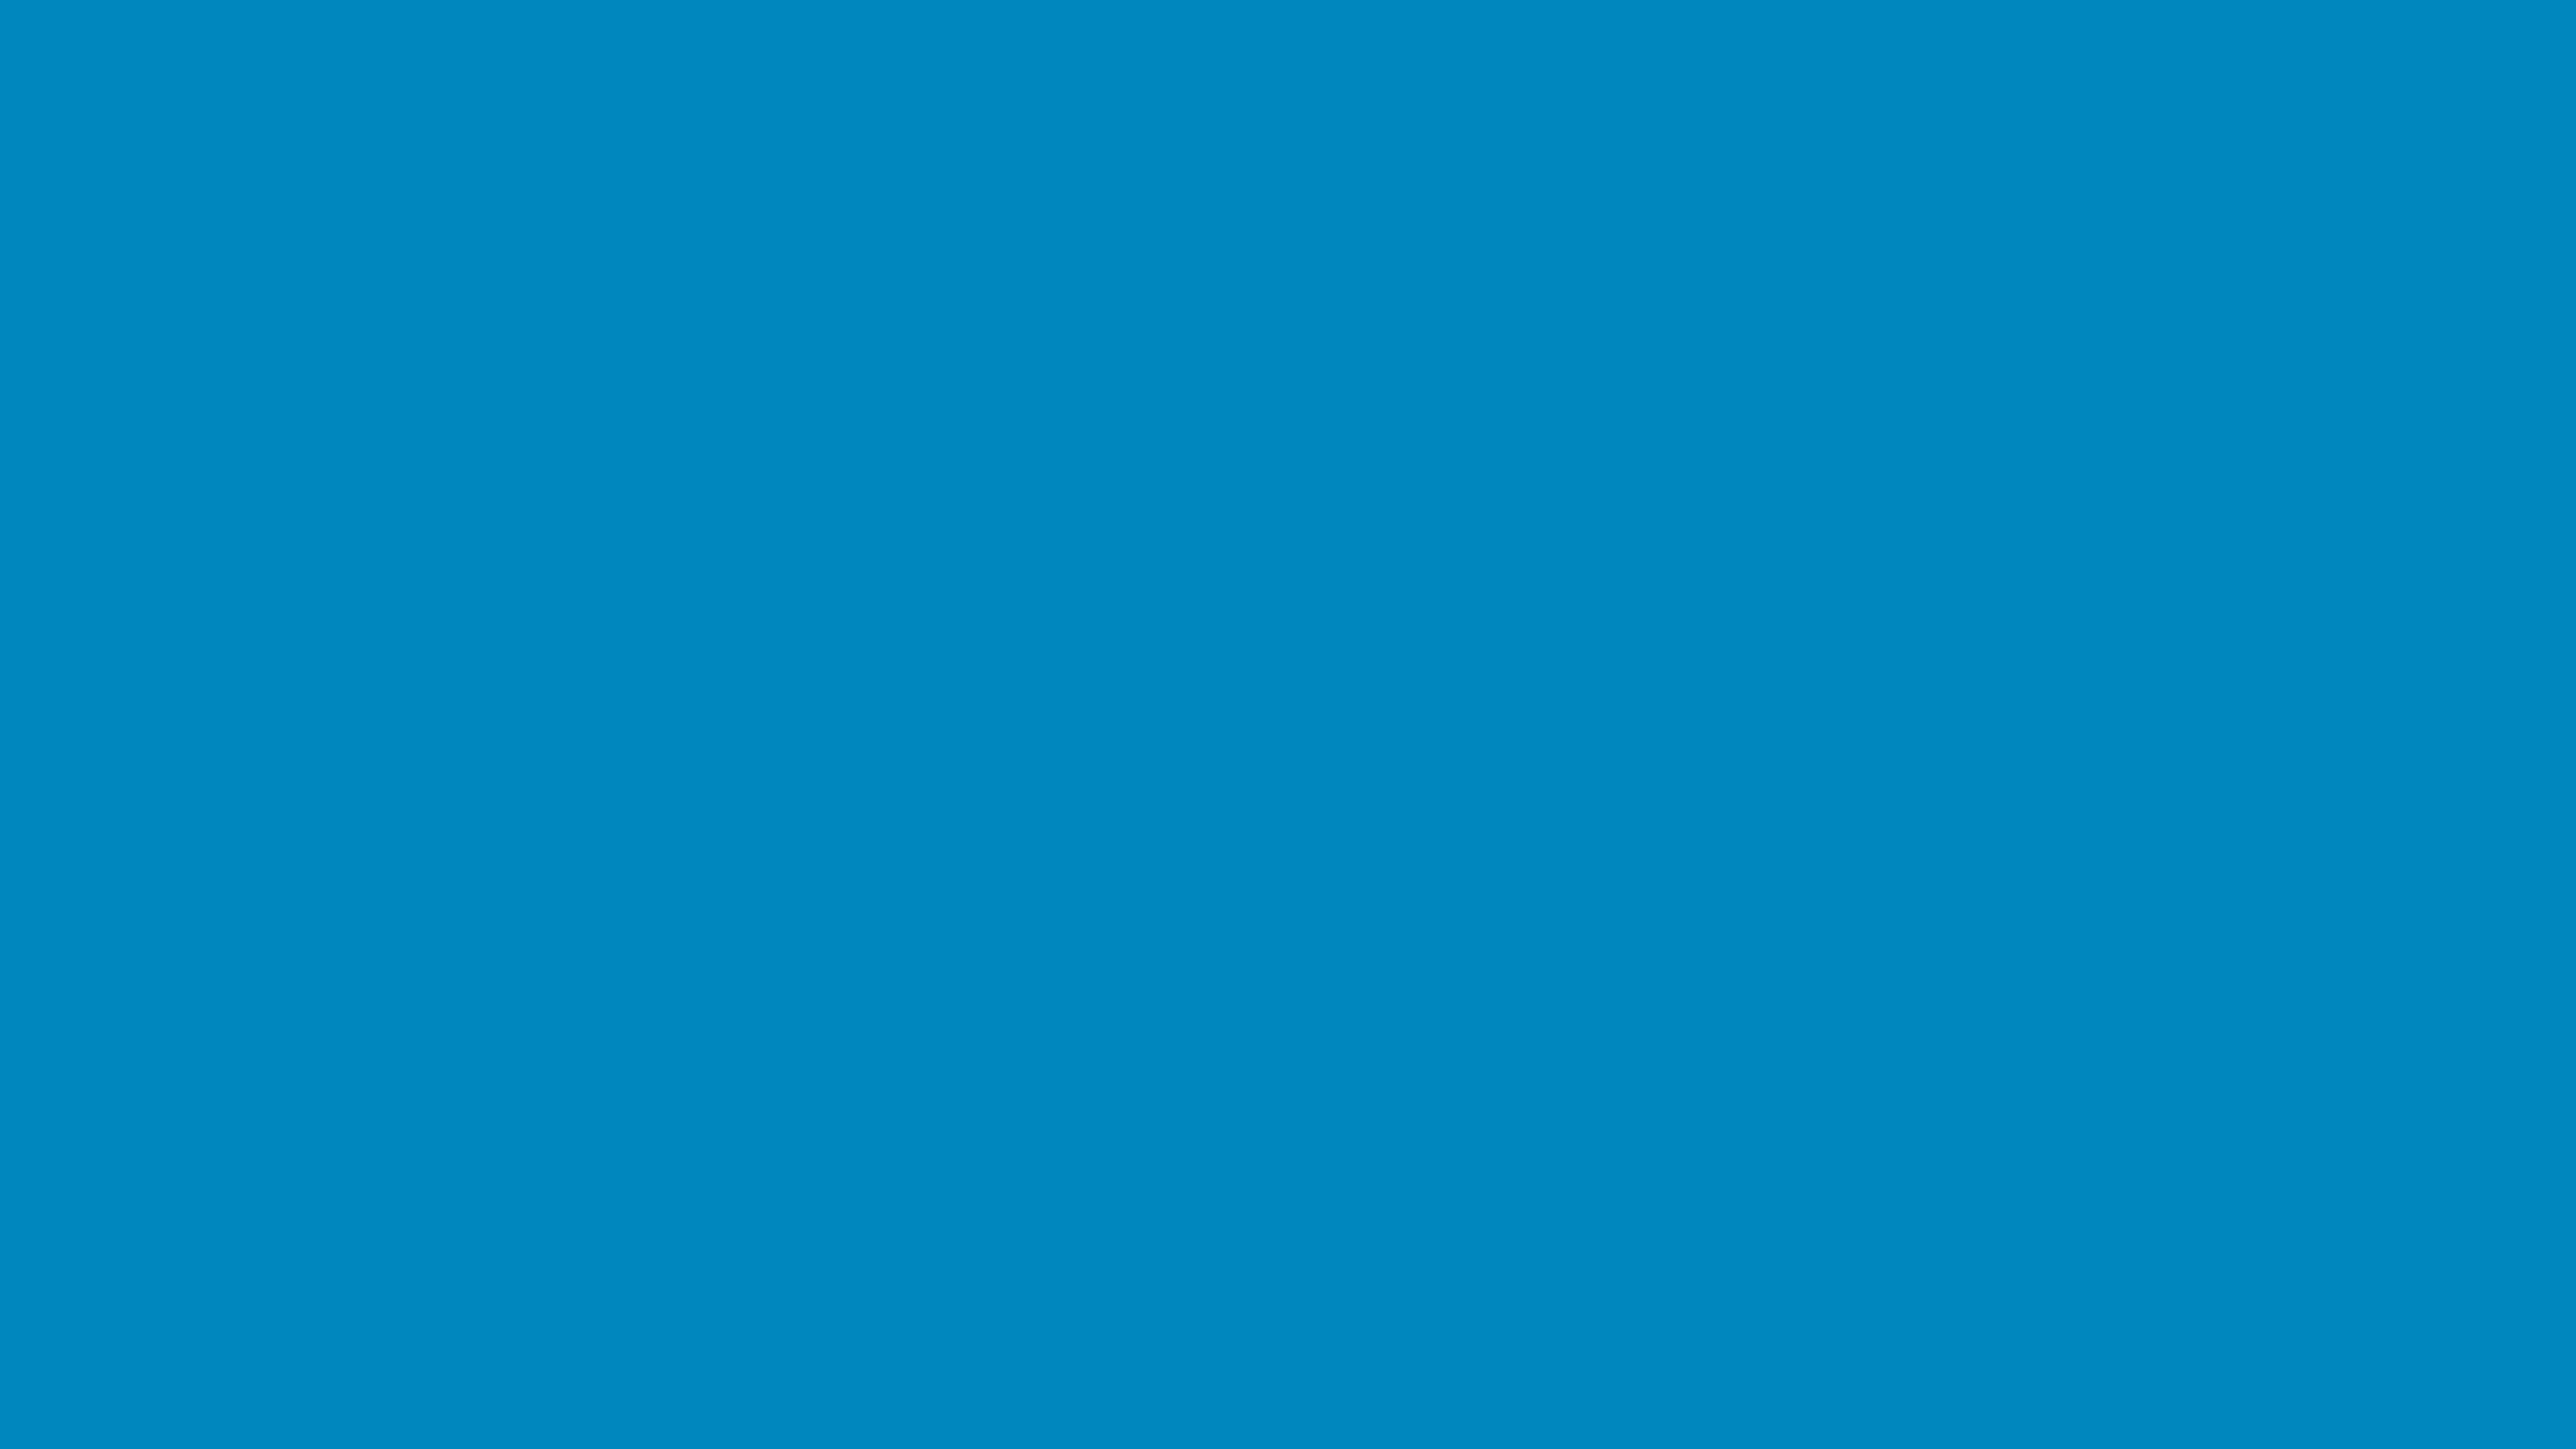 7680x4320 Blue NCS Solid Color Background